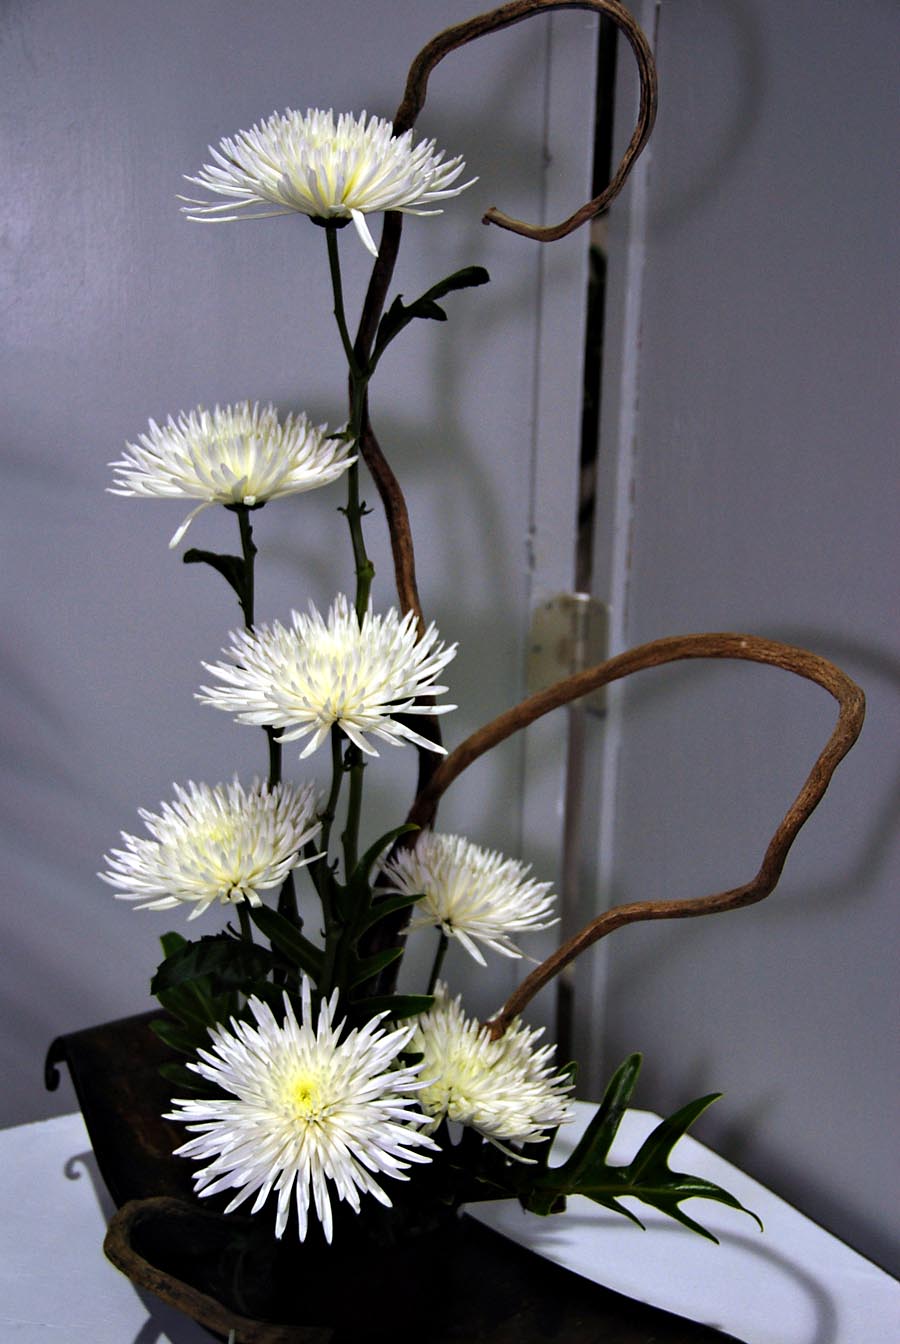 Dahlia arrangement